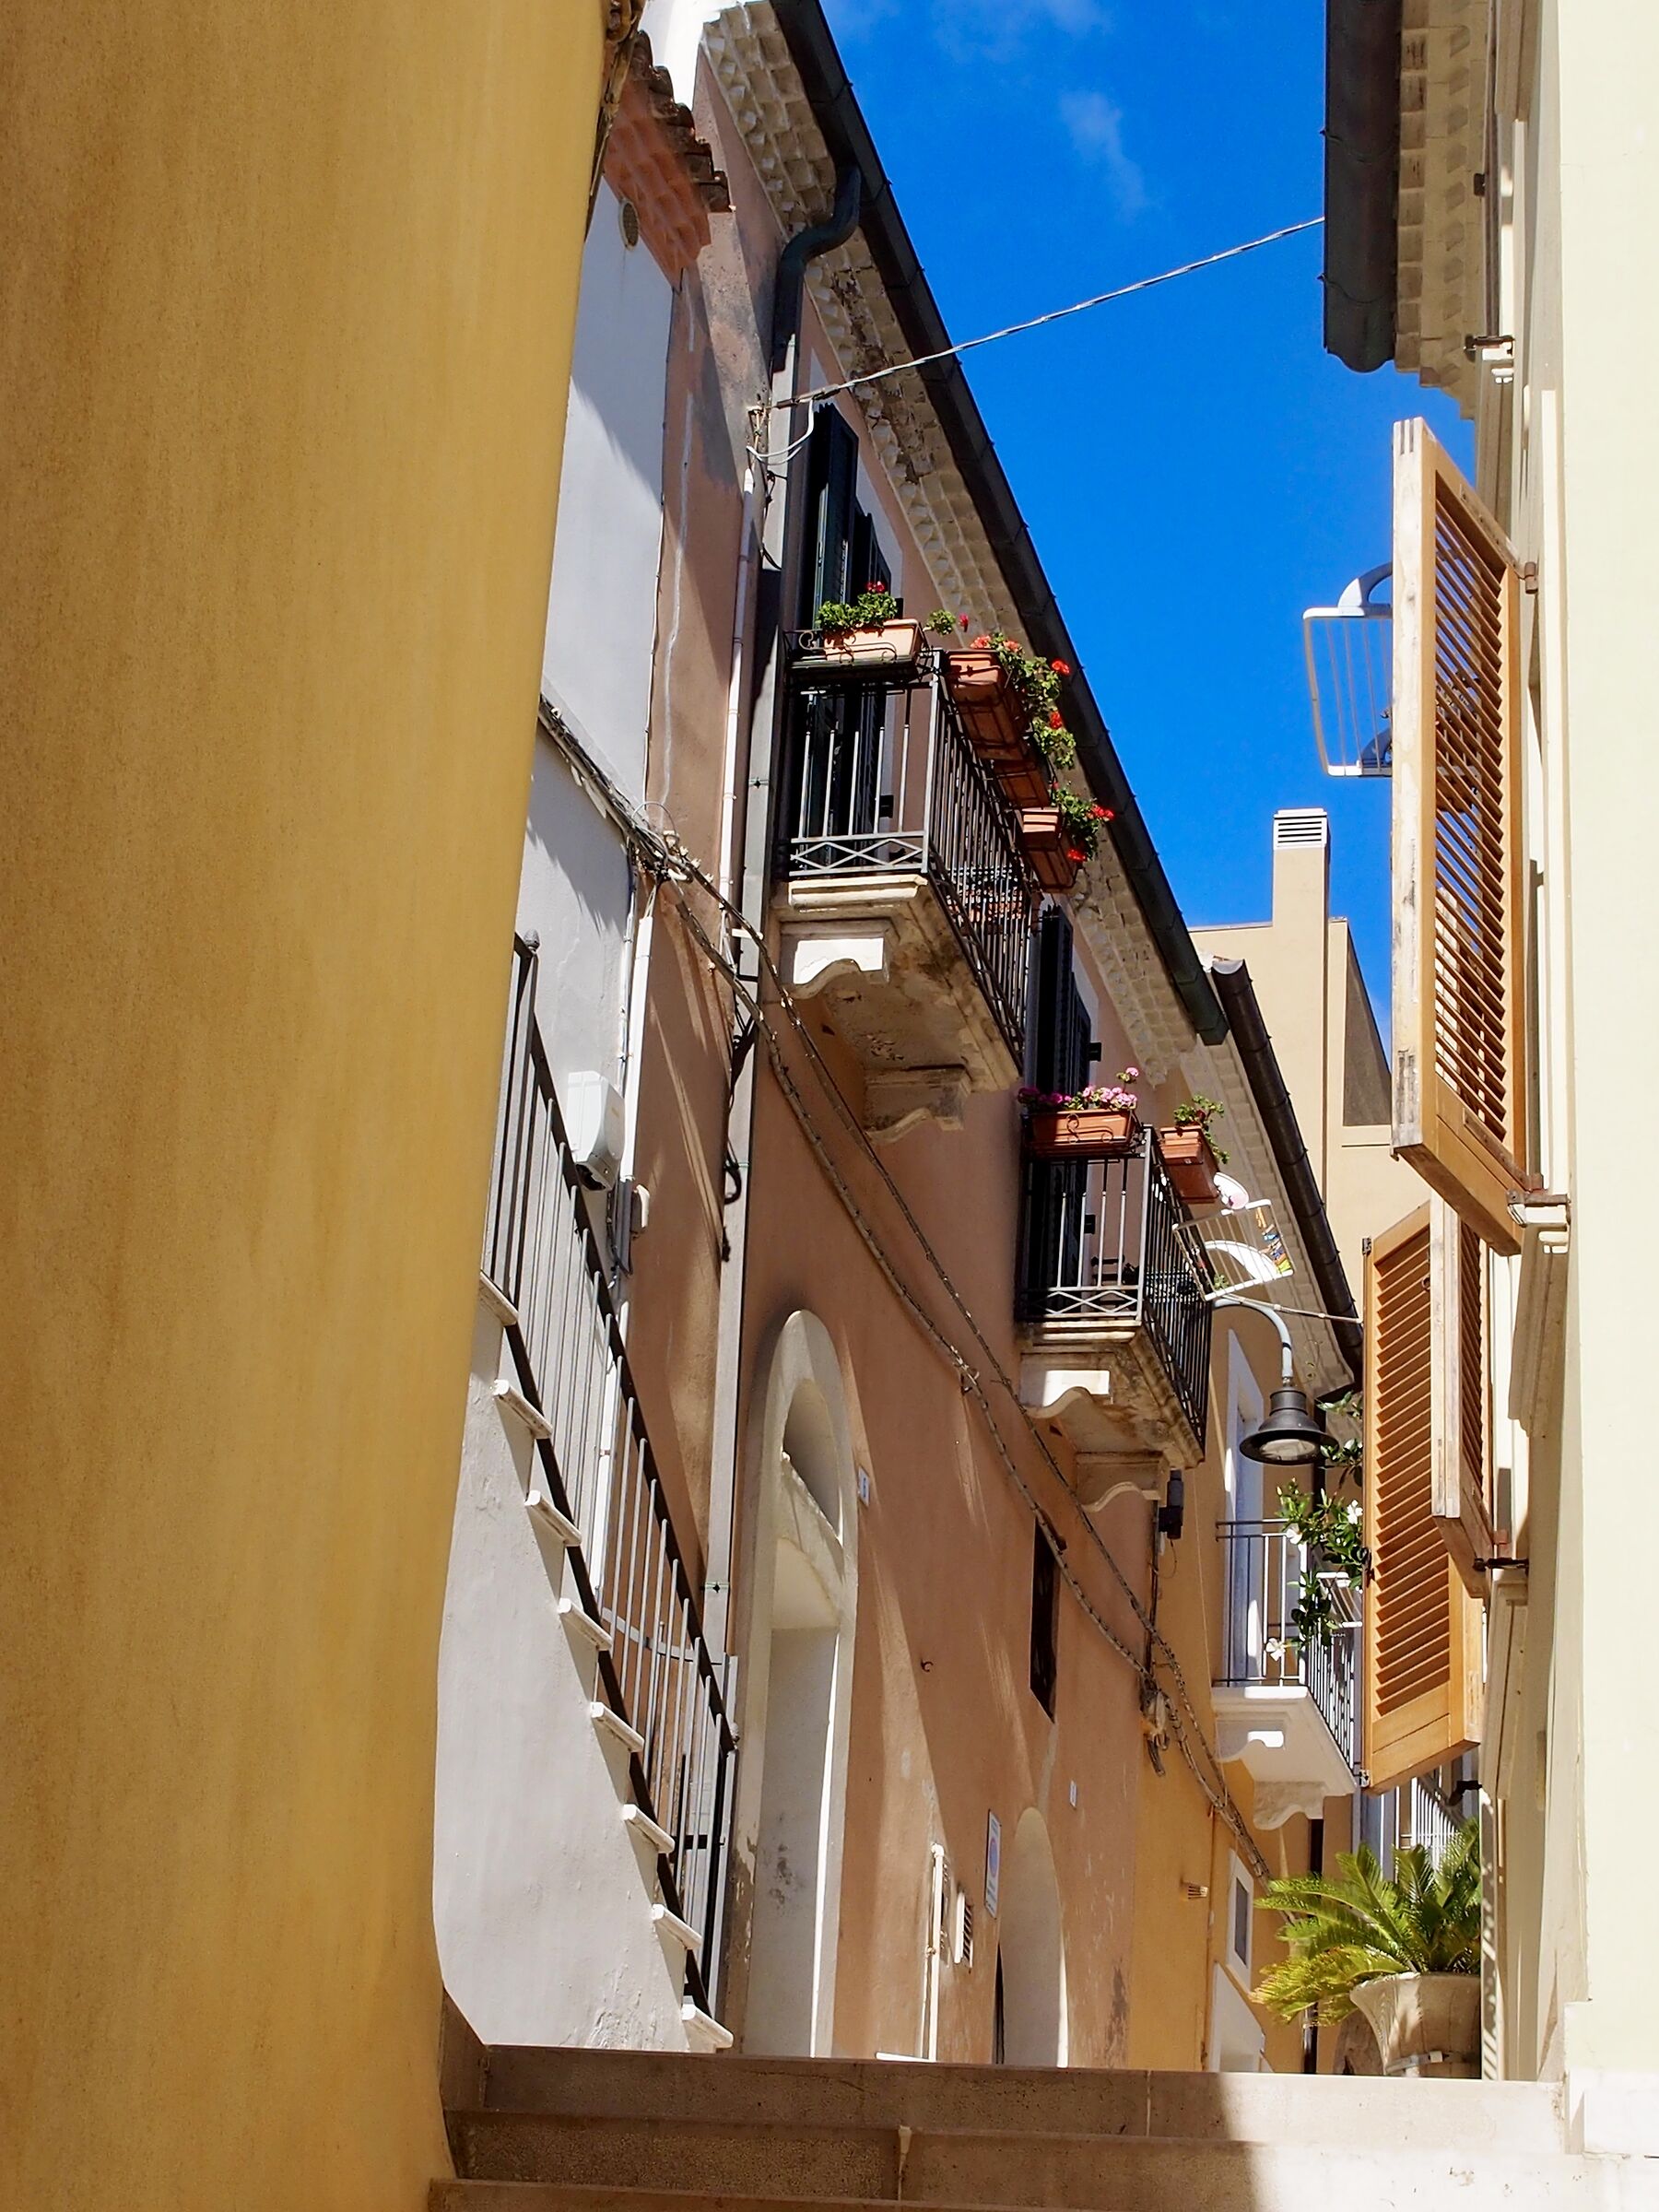 The Alleys of Termoli...